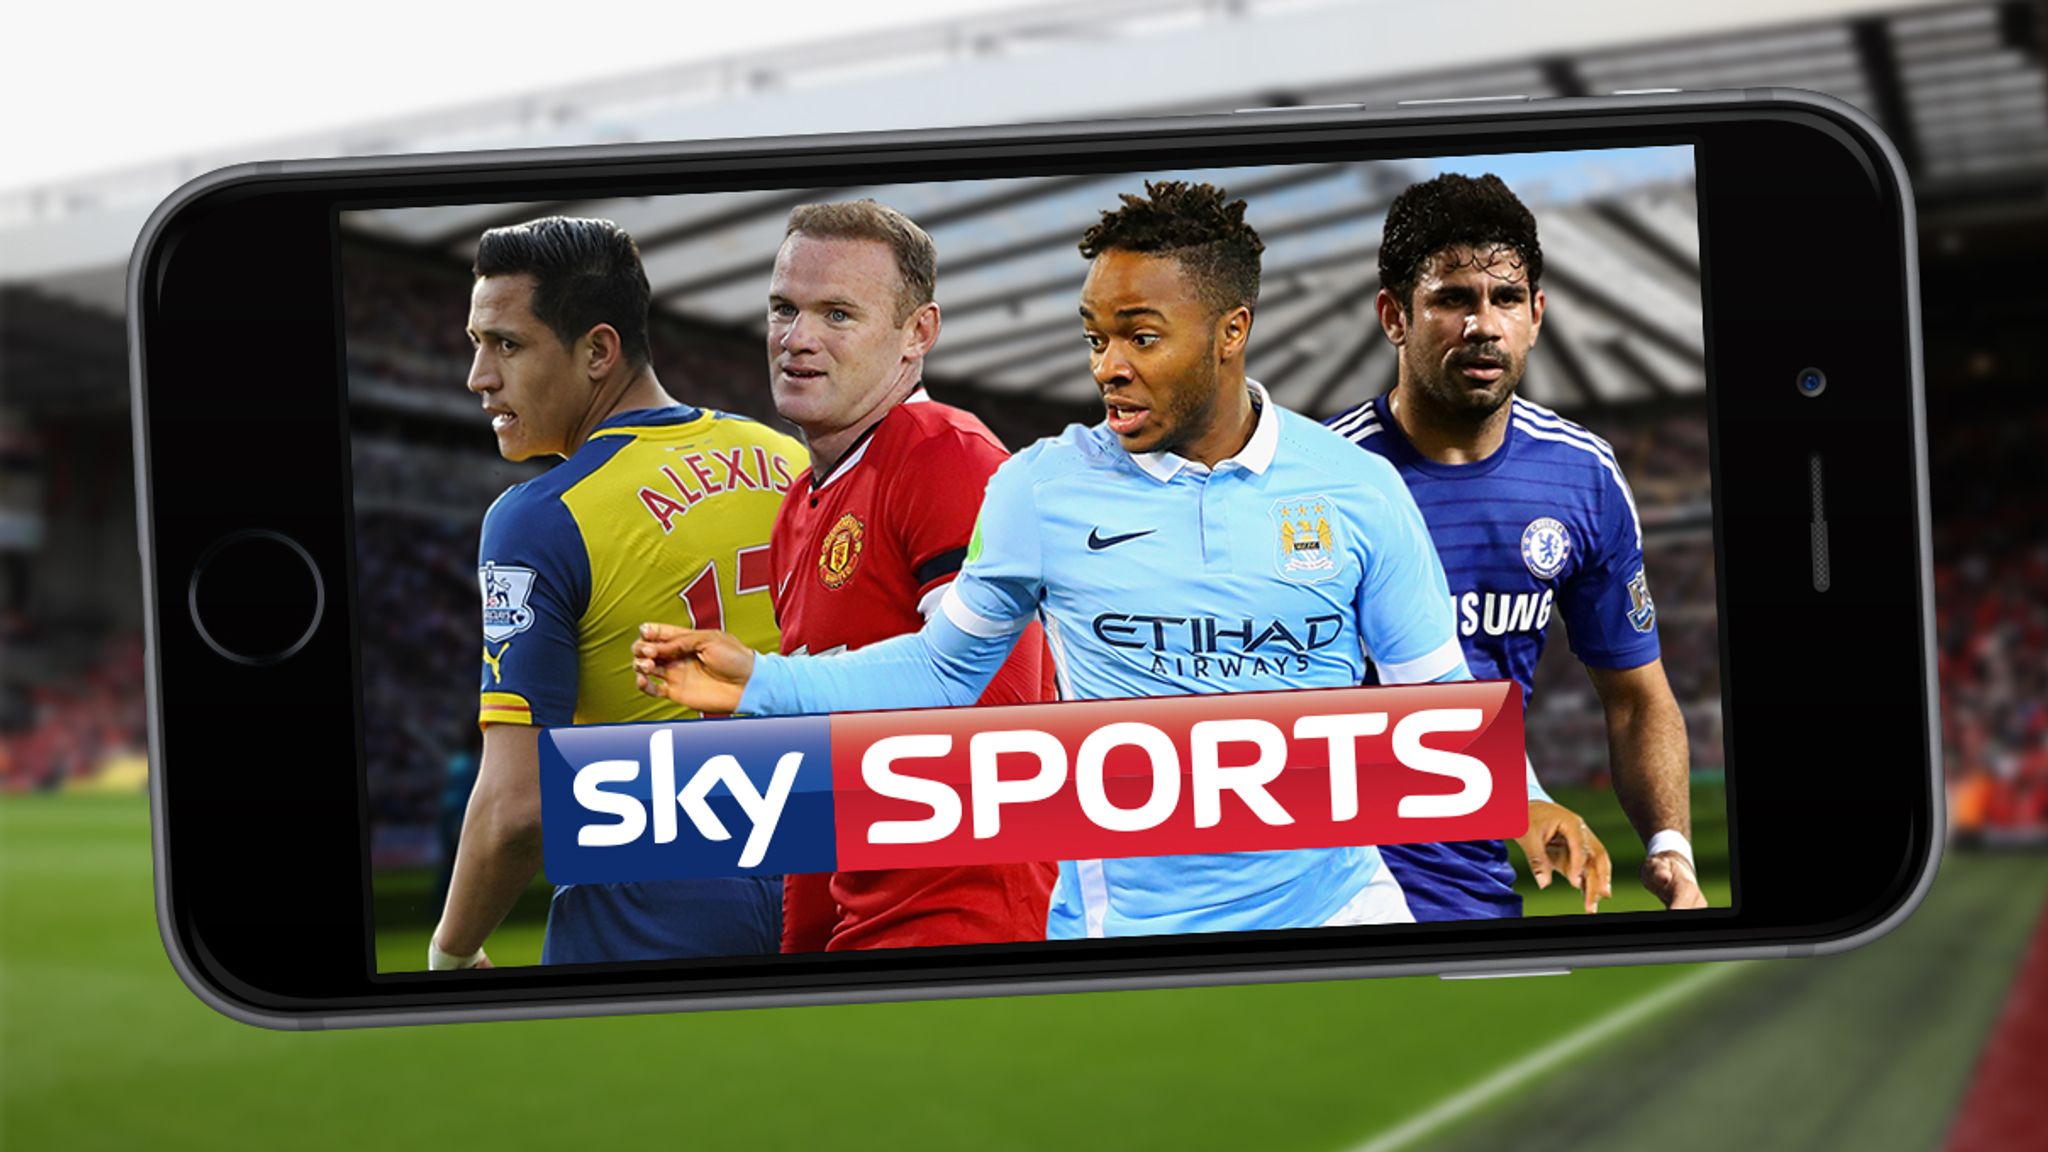 Sky sport live stream. Sky Sports Premier League. Sky Sports Football. Sky Sports Premier League uk. Sky Sports Football uk.